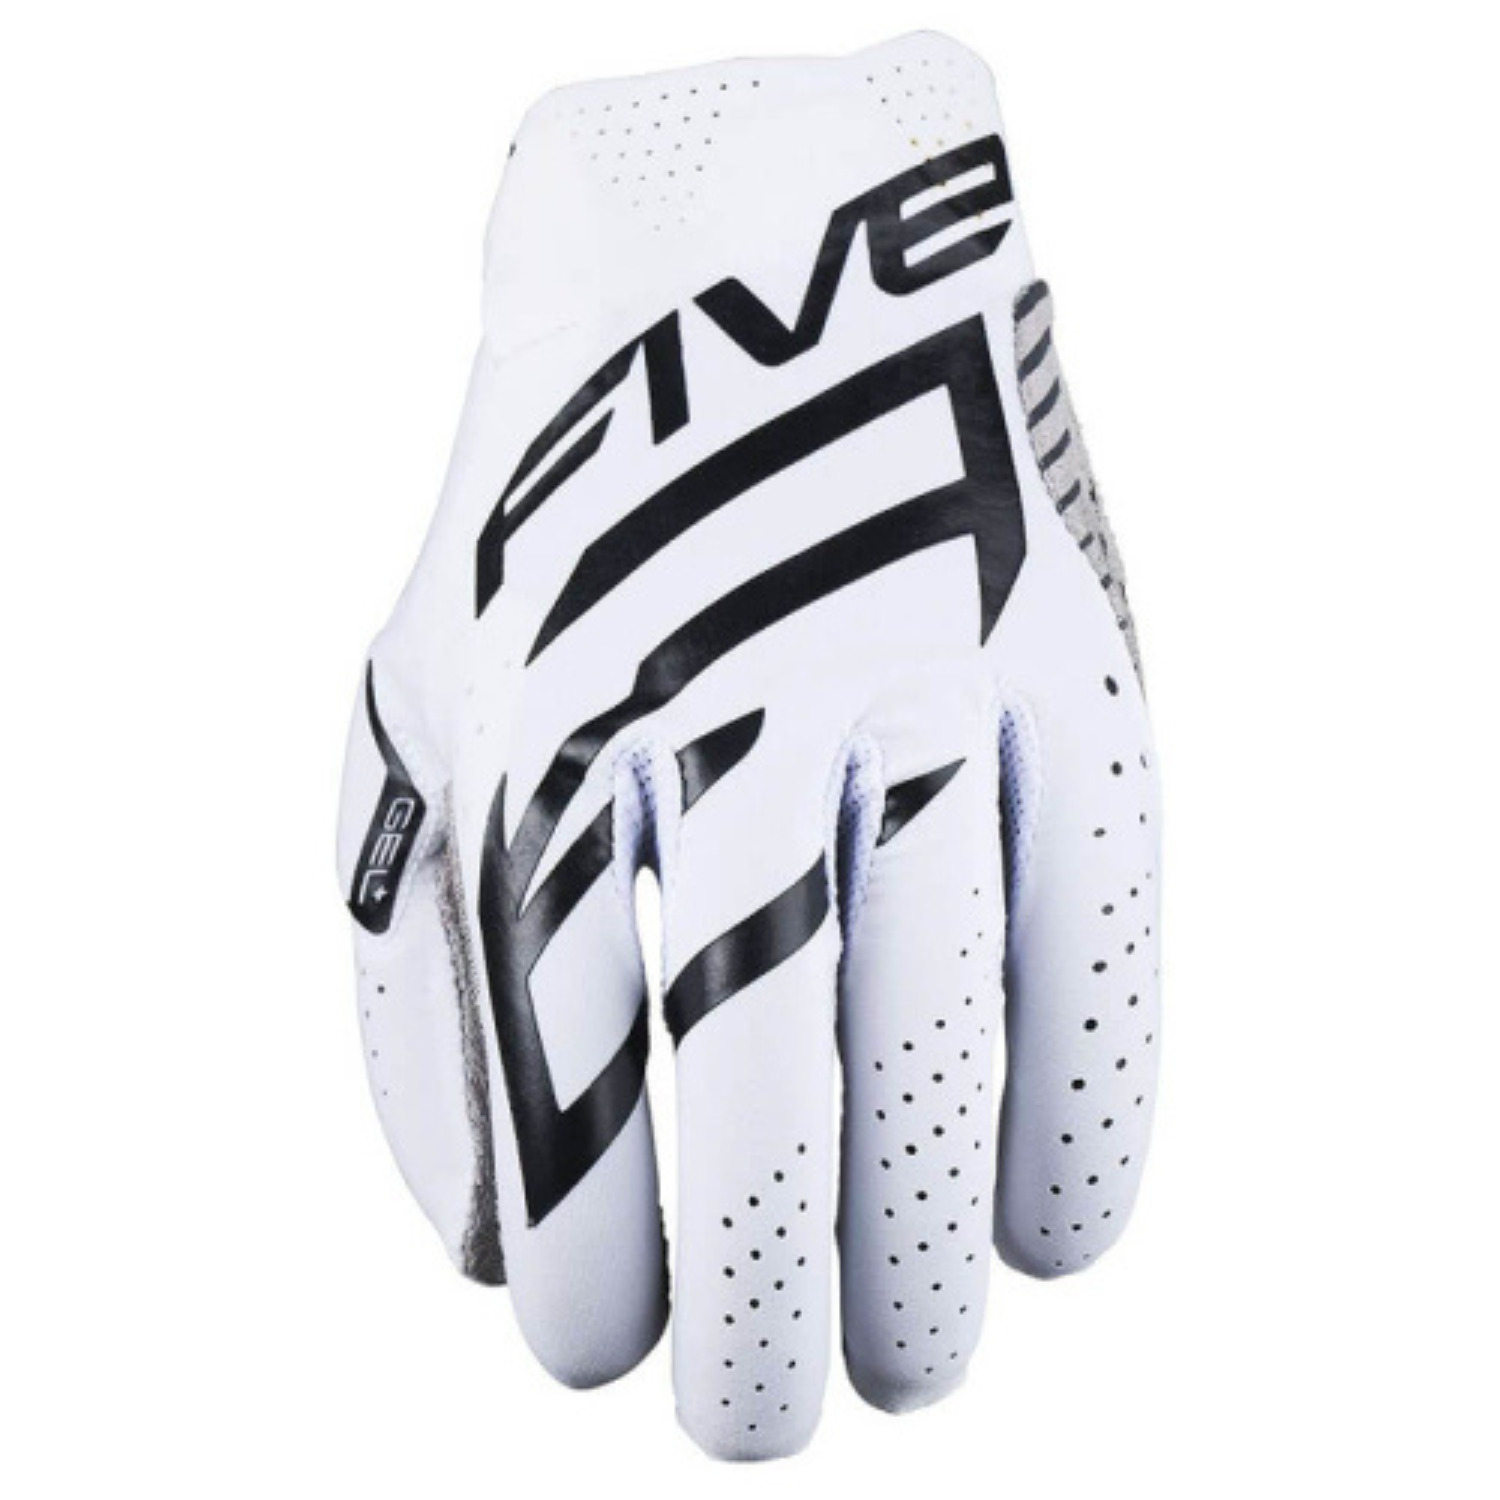 Image of Five MXF Race Gloves White Black Größe M